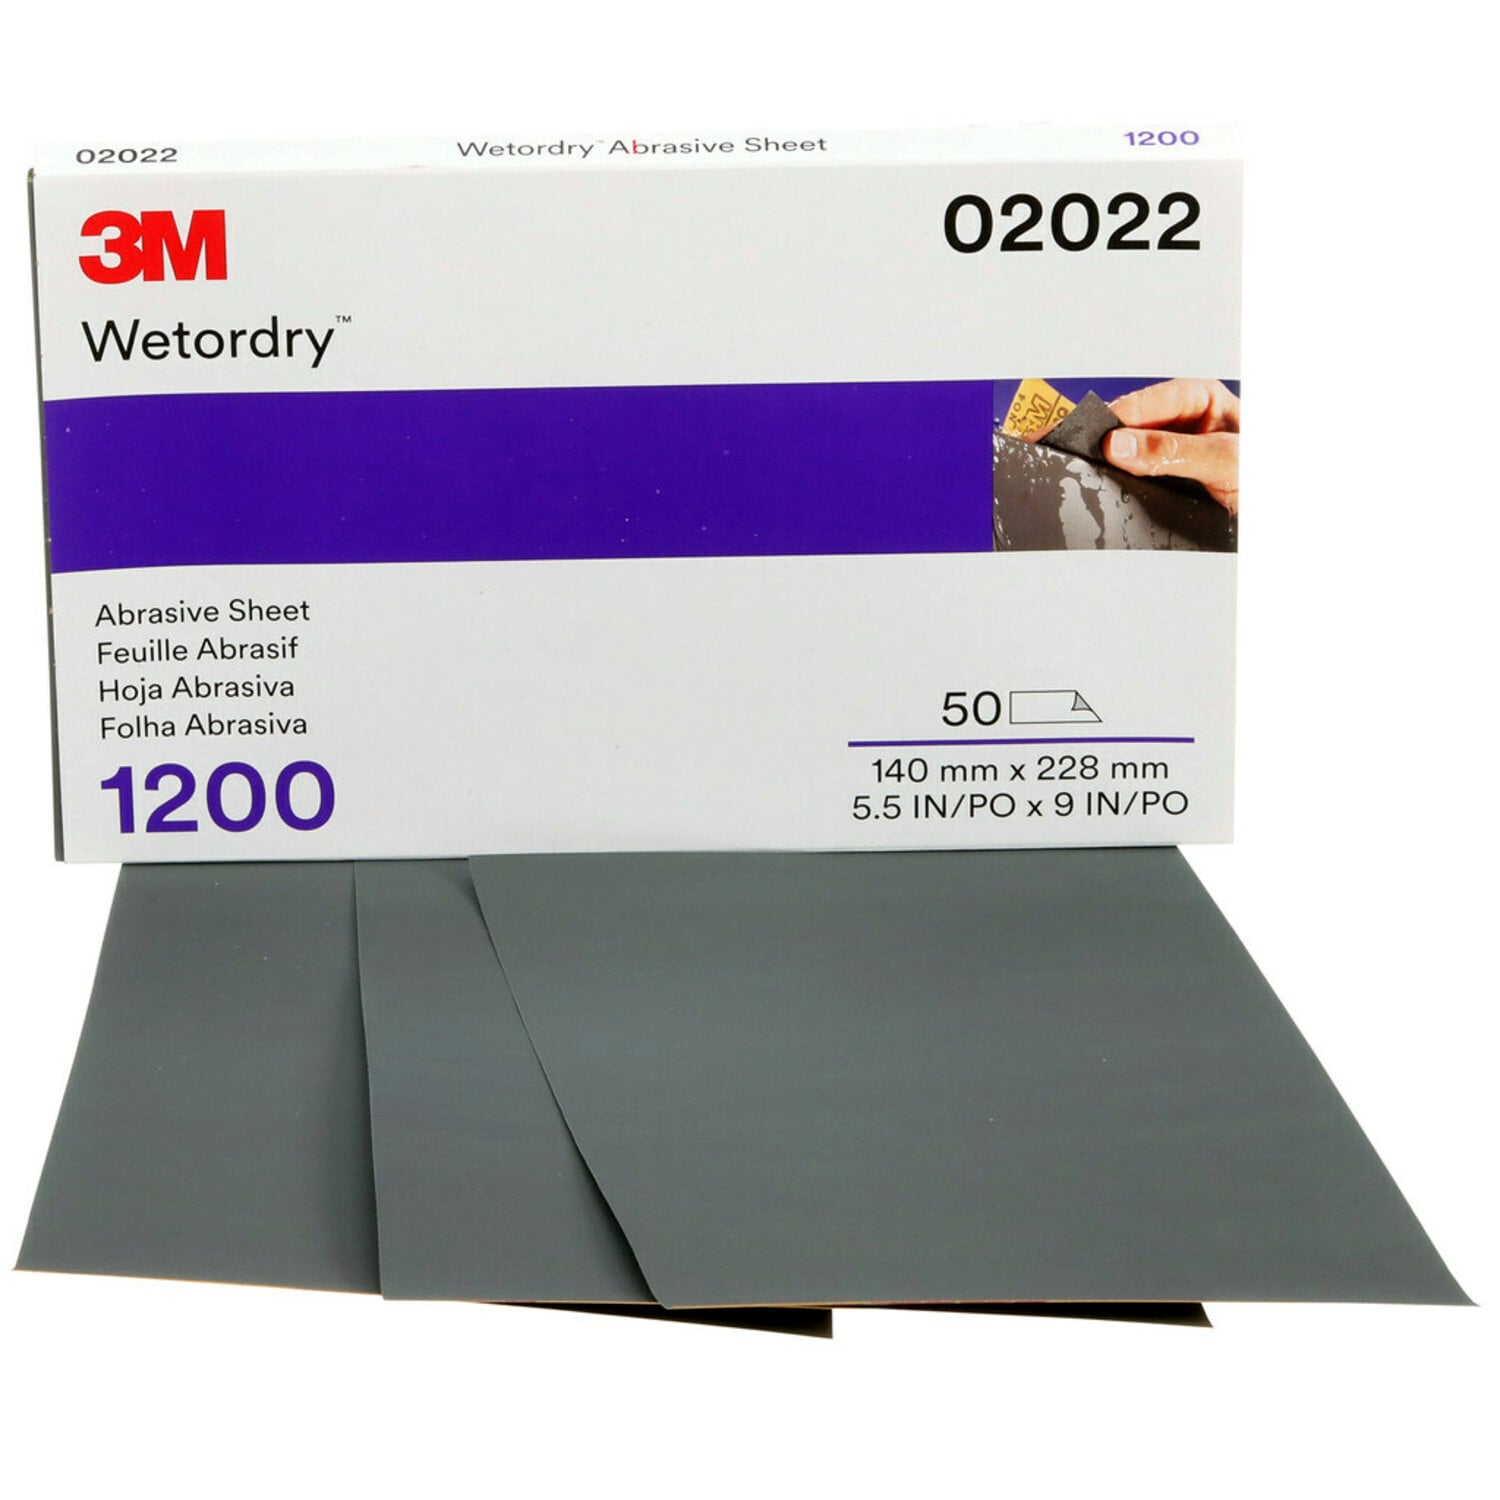 7000028330 - 3M Wetordry Abrasive Sheet 401Q, 02022, 1200, 5 1/2 in x 9 in, 50
sheets per carton, 5 cartons per case